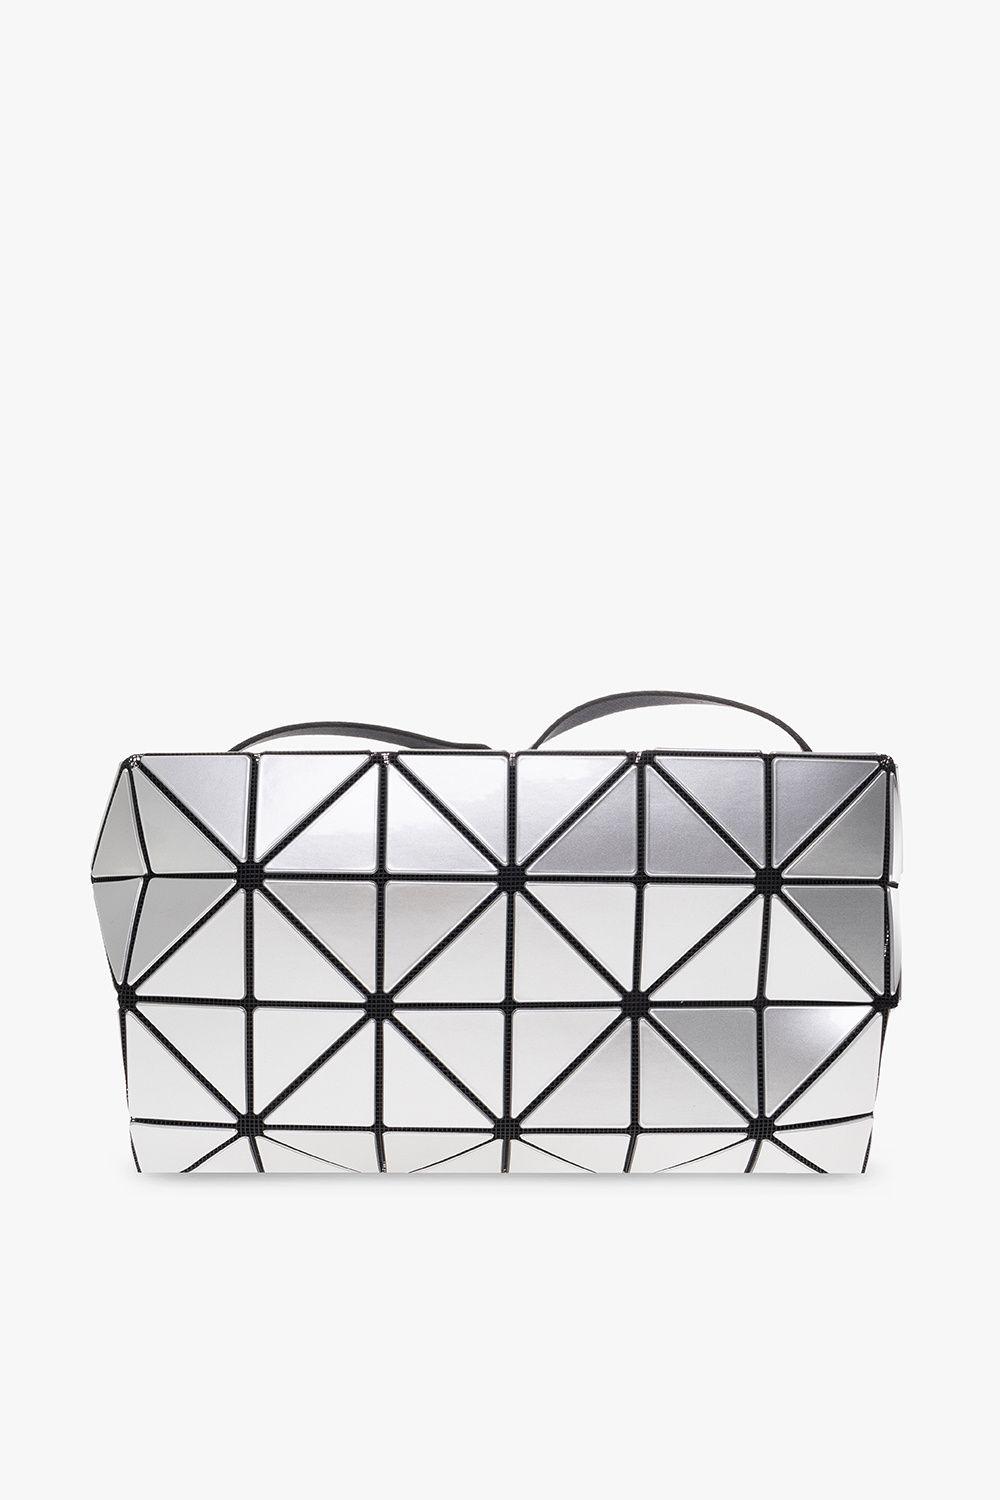 Bao Bao Issey Miyake 'carton' Glossy Shoulder Bag in Metallic | Lyst